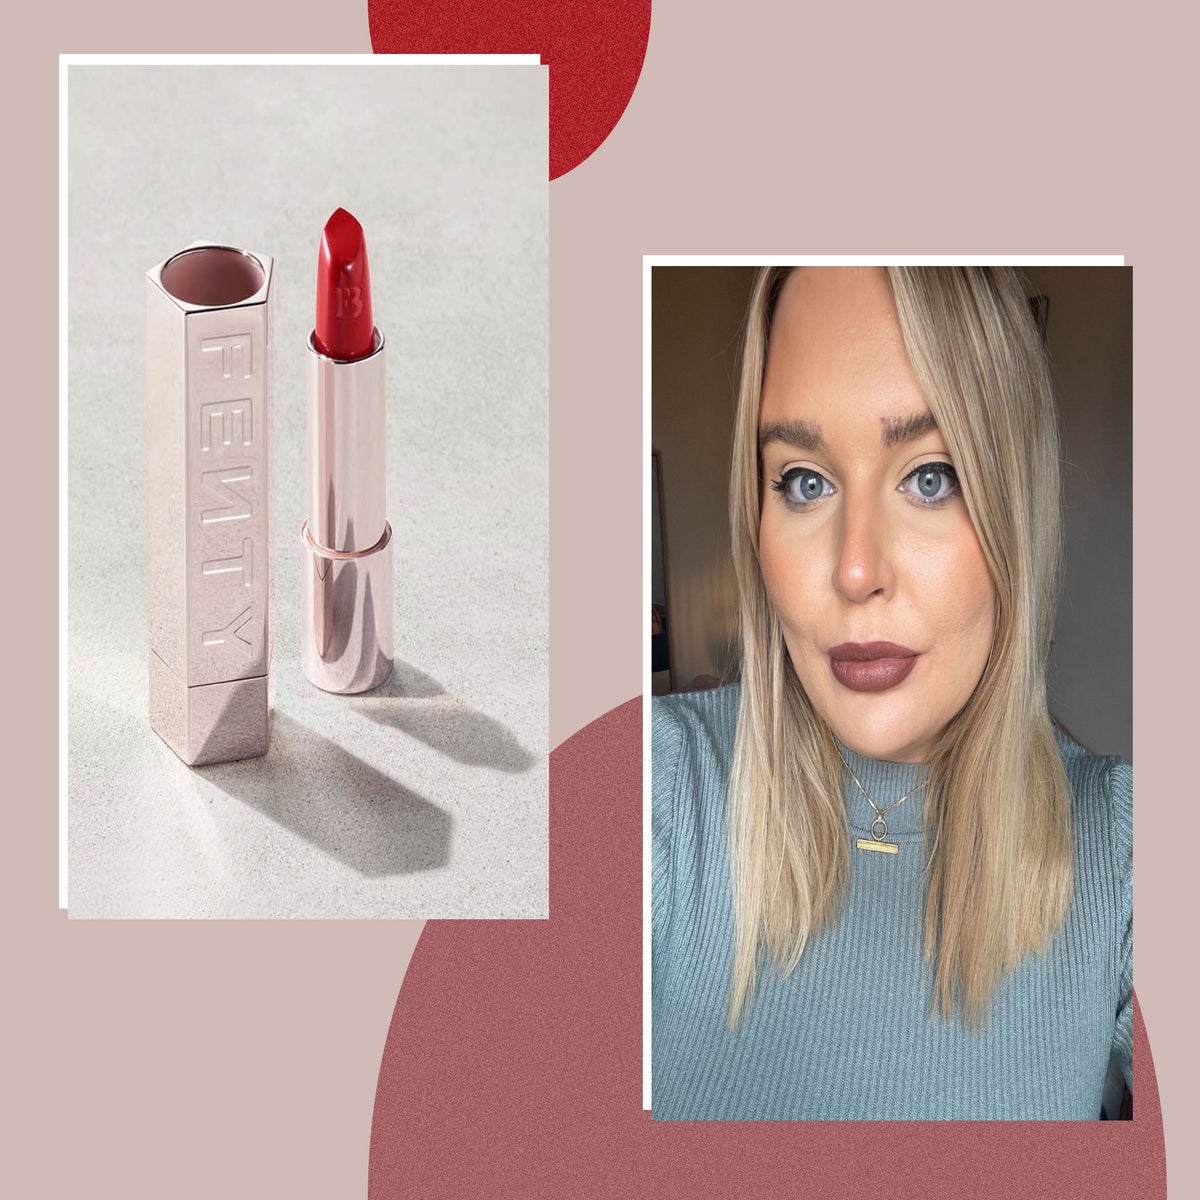 Lip Drama: Fenty Beauty Mattemoiselle Lipstick Collection